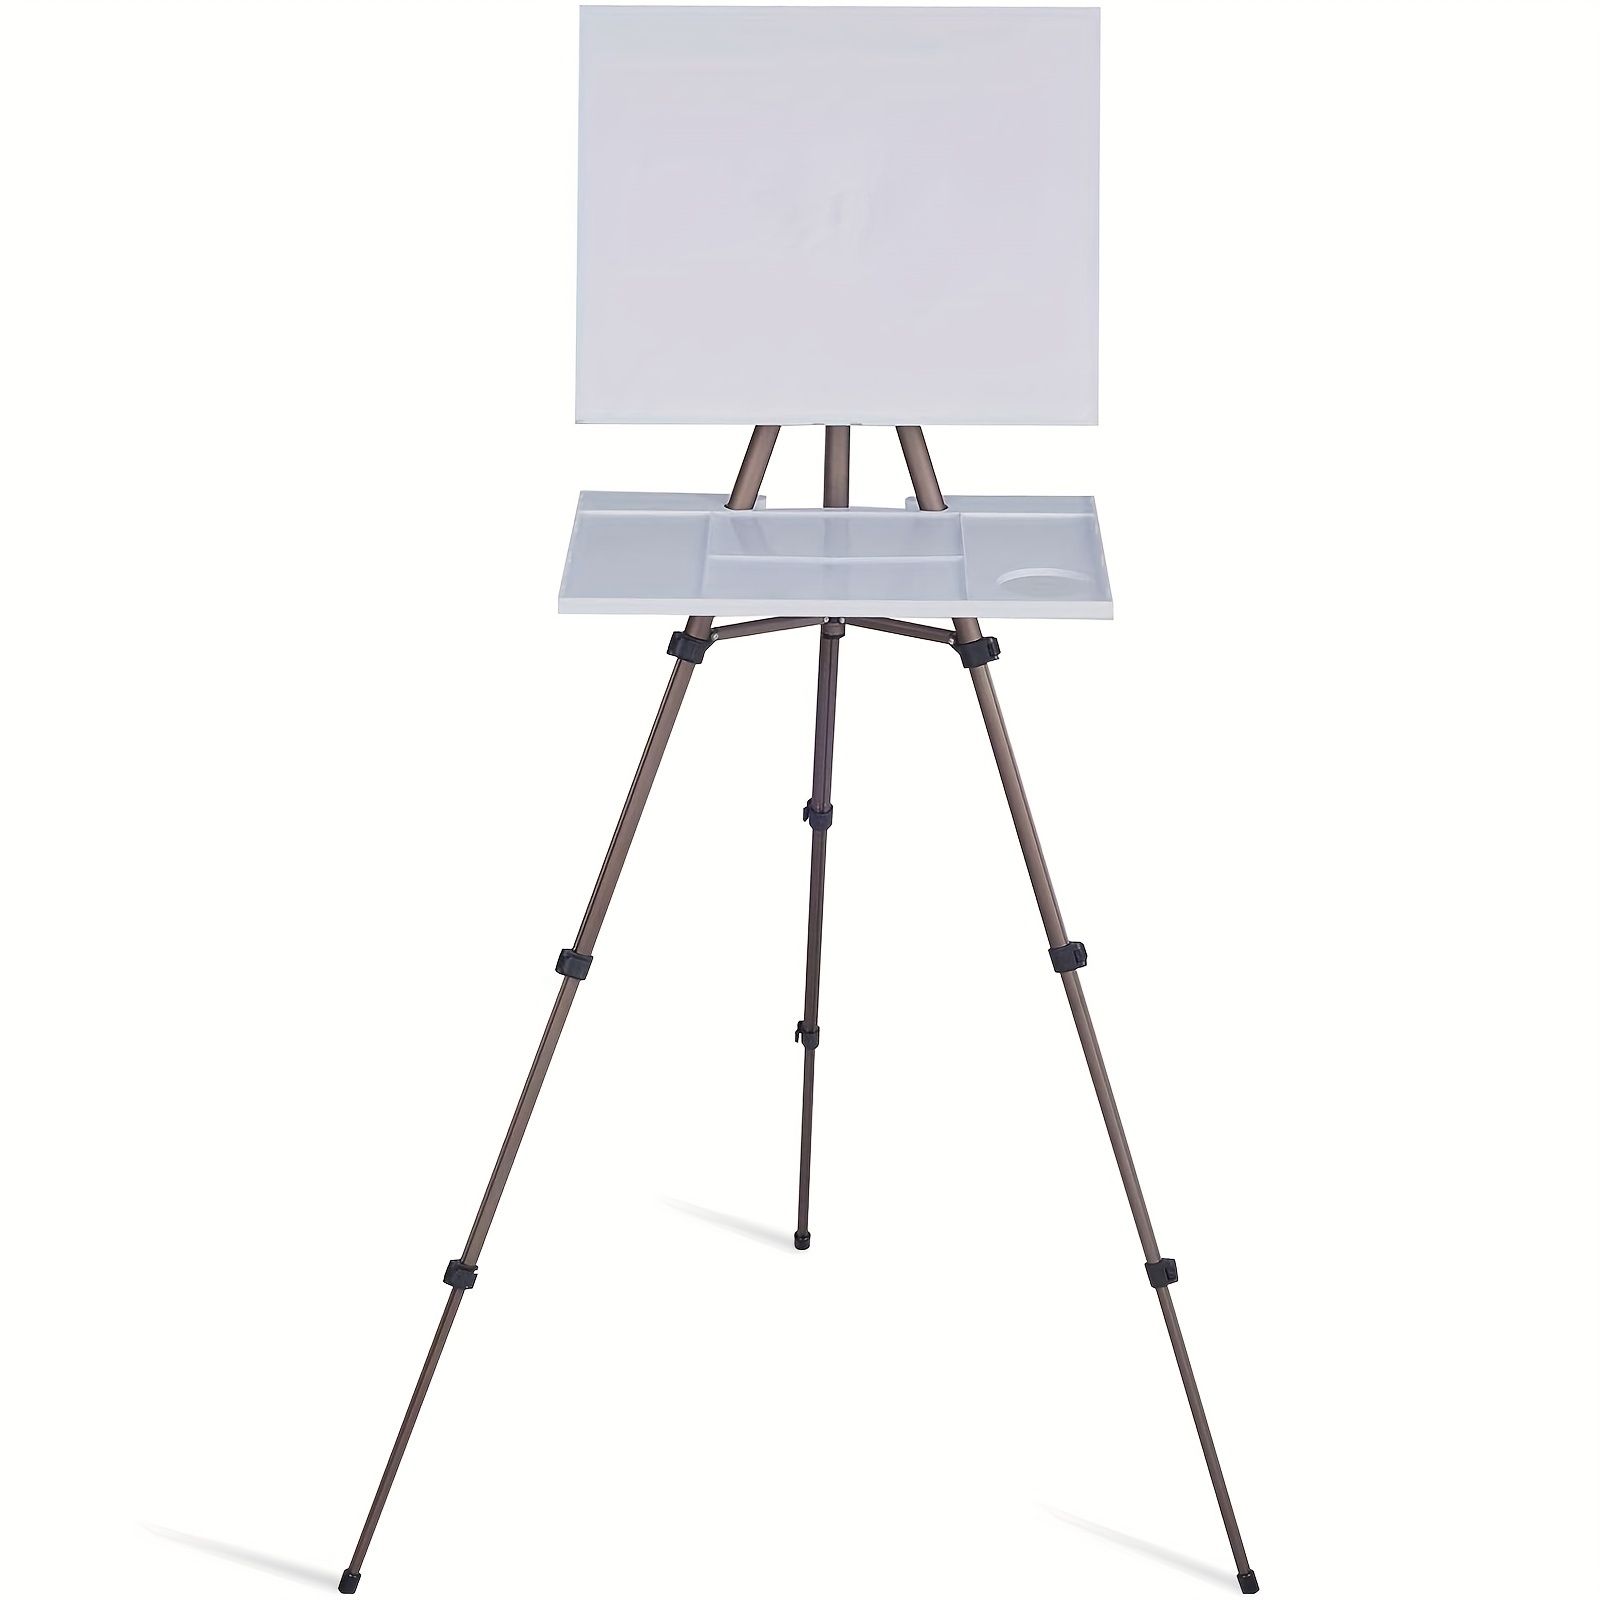 MEEDEN Basic Large Studio Easel, Height Adjustable Artist Portable